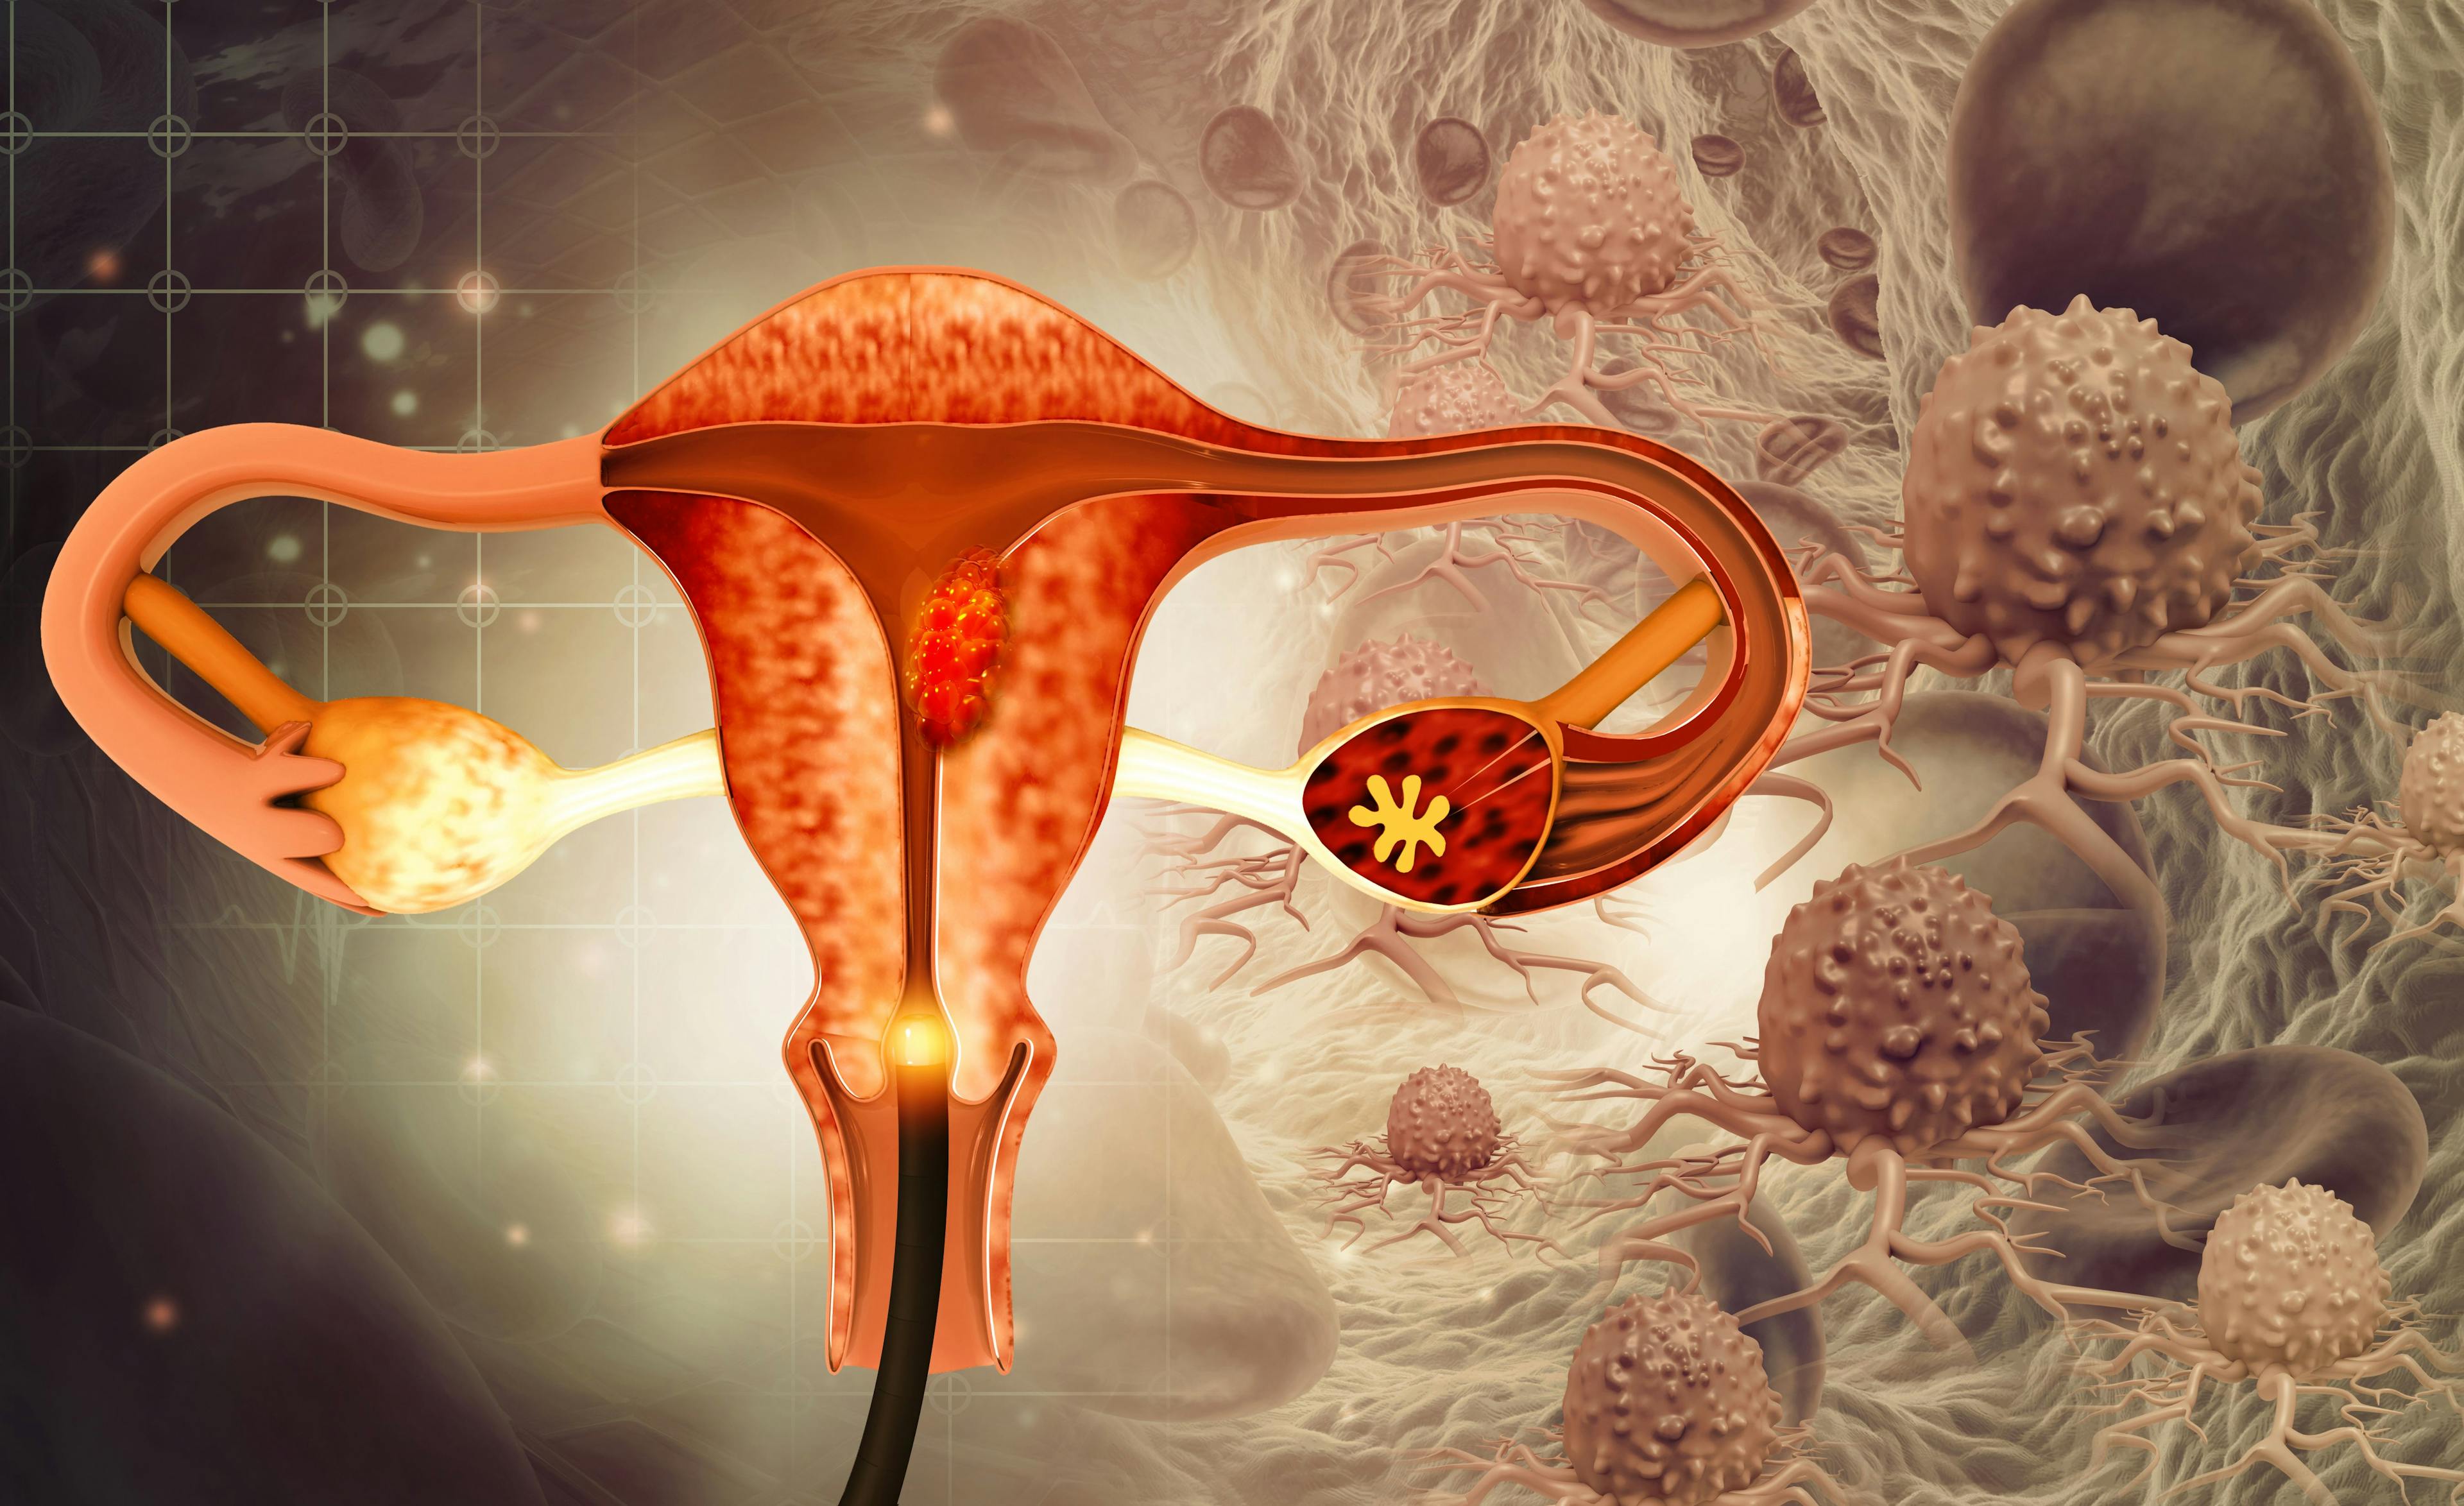 Does deep endometriosis surgery impact bladder function?